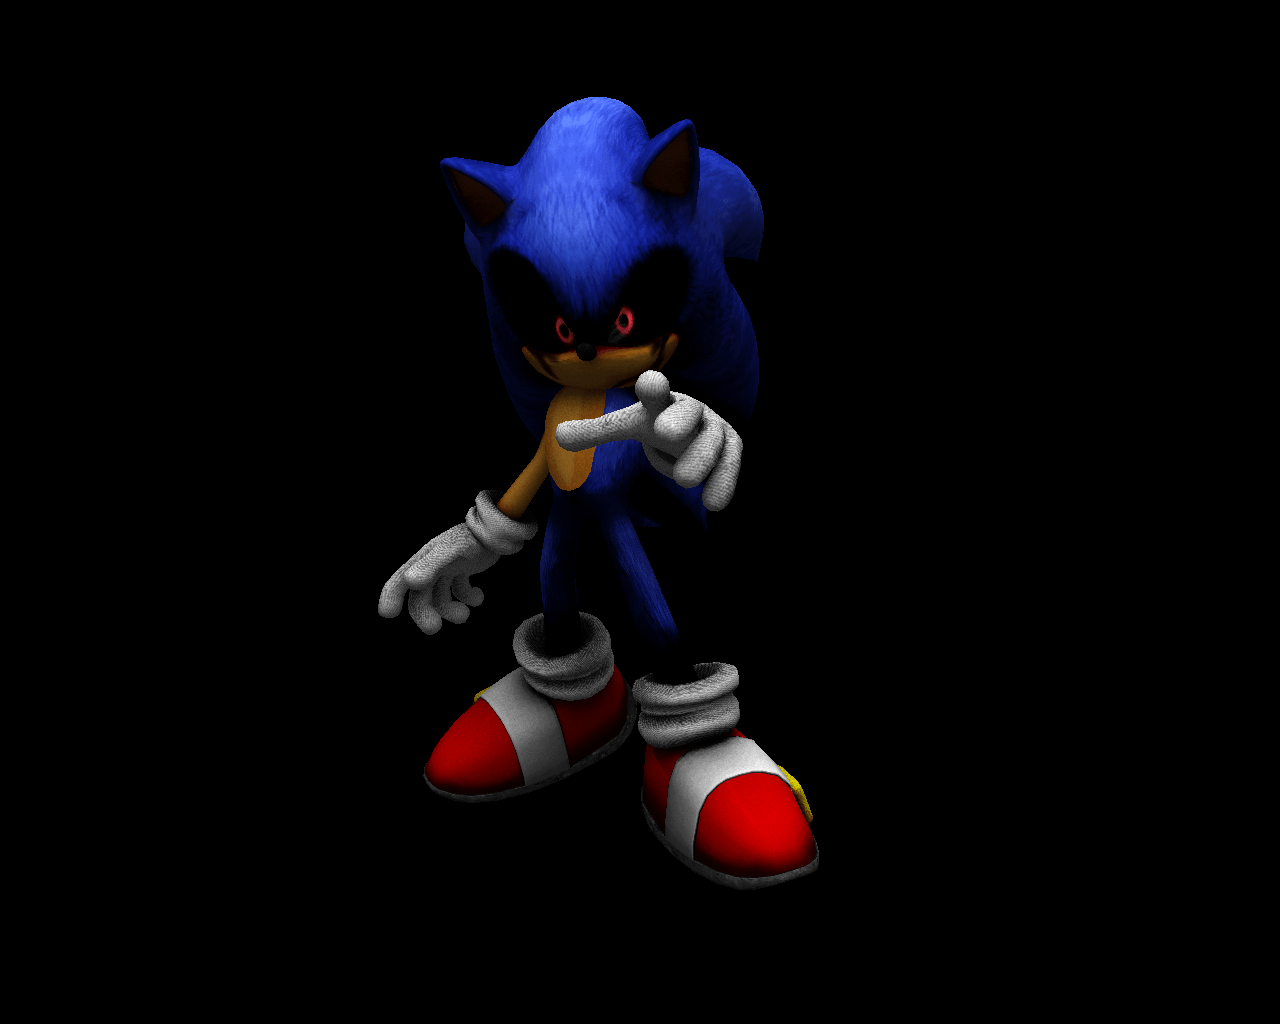 Sonic.exe.